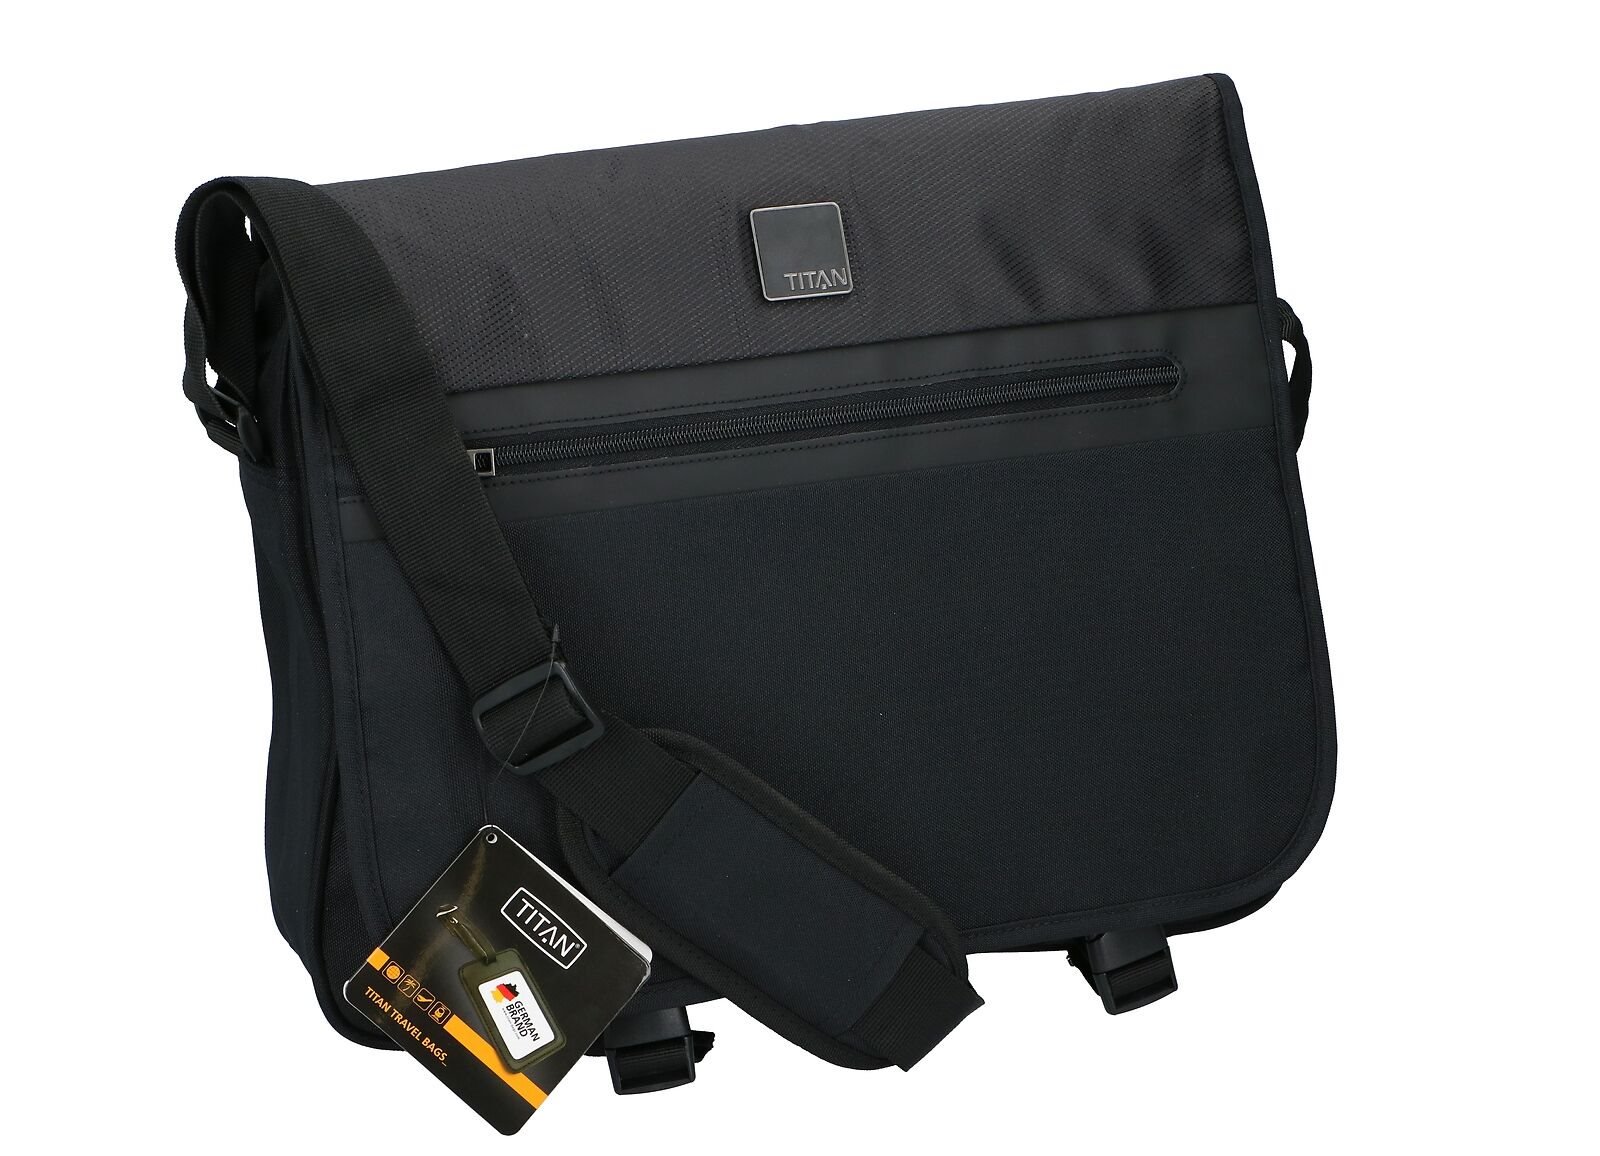 Titan Τσάντα Όμου Messenger Bag 420x340x37mm Μαύρο